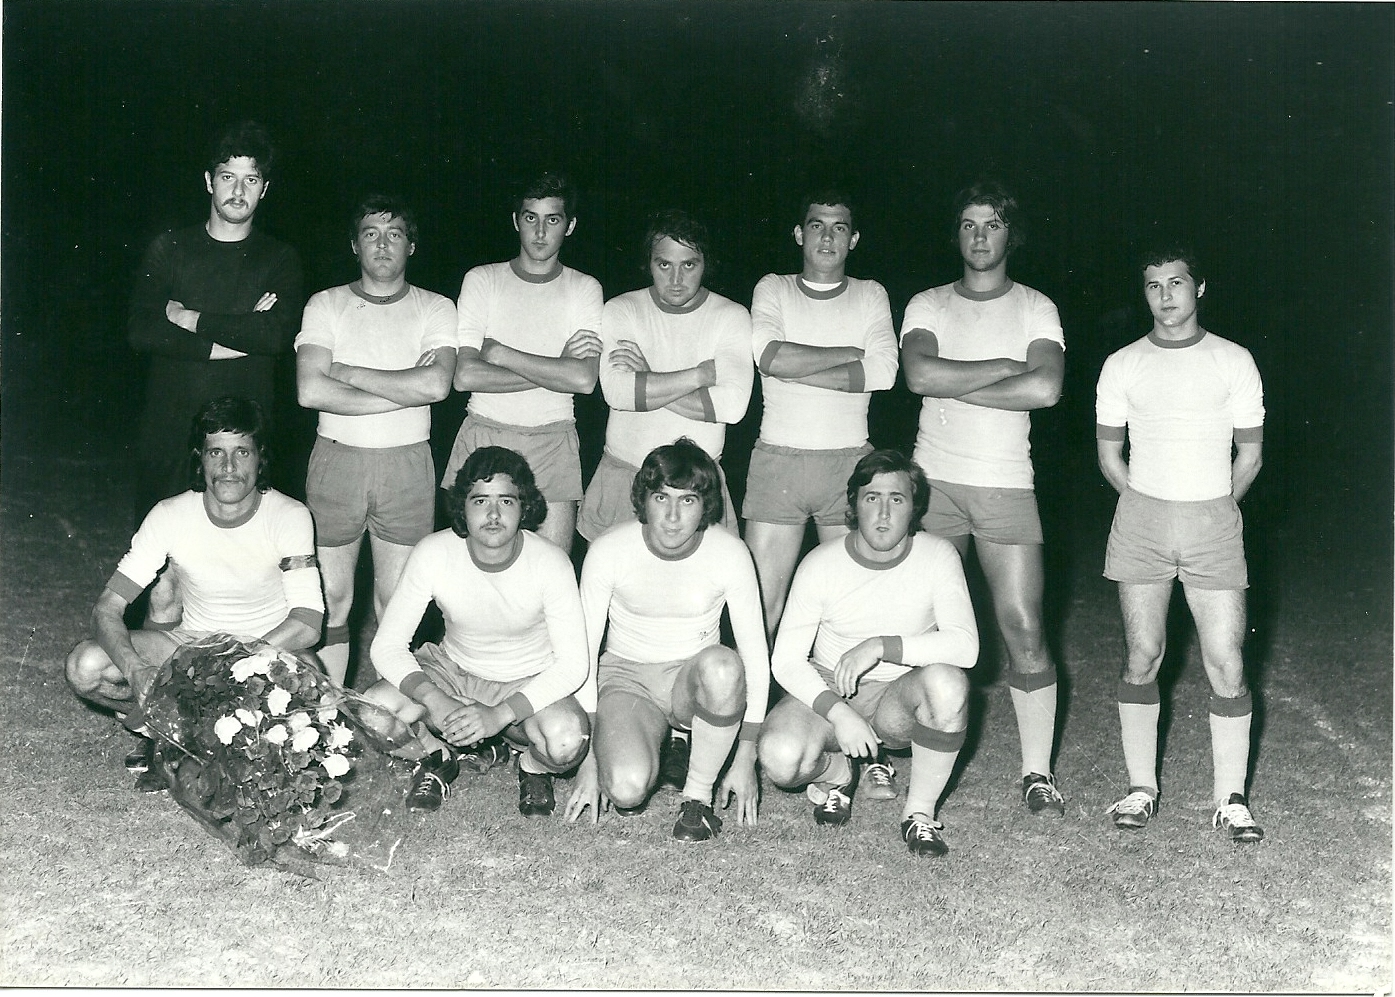 Torneo 1974